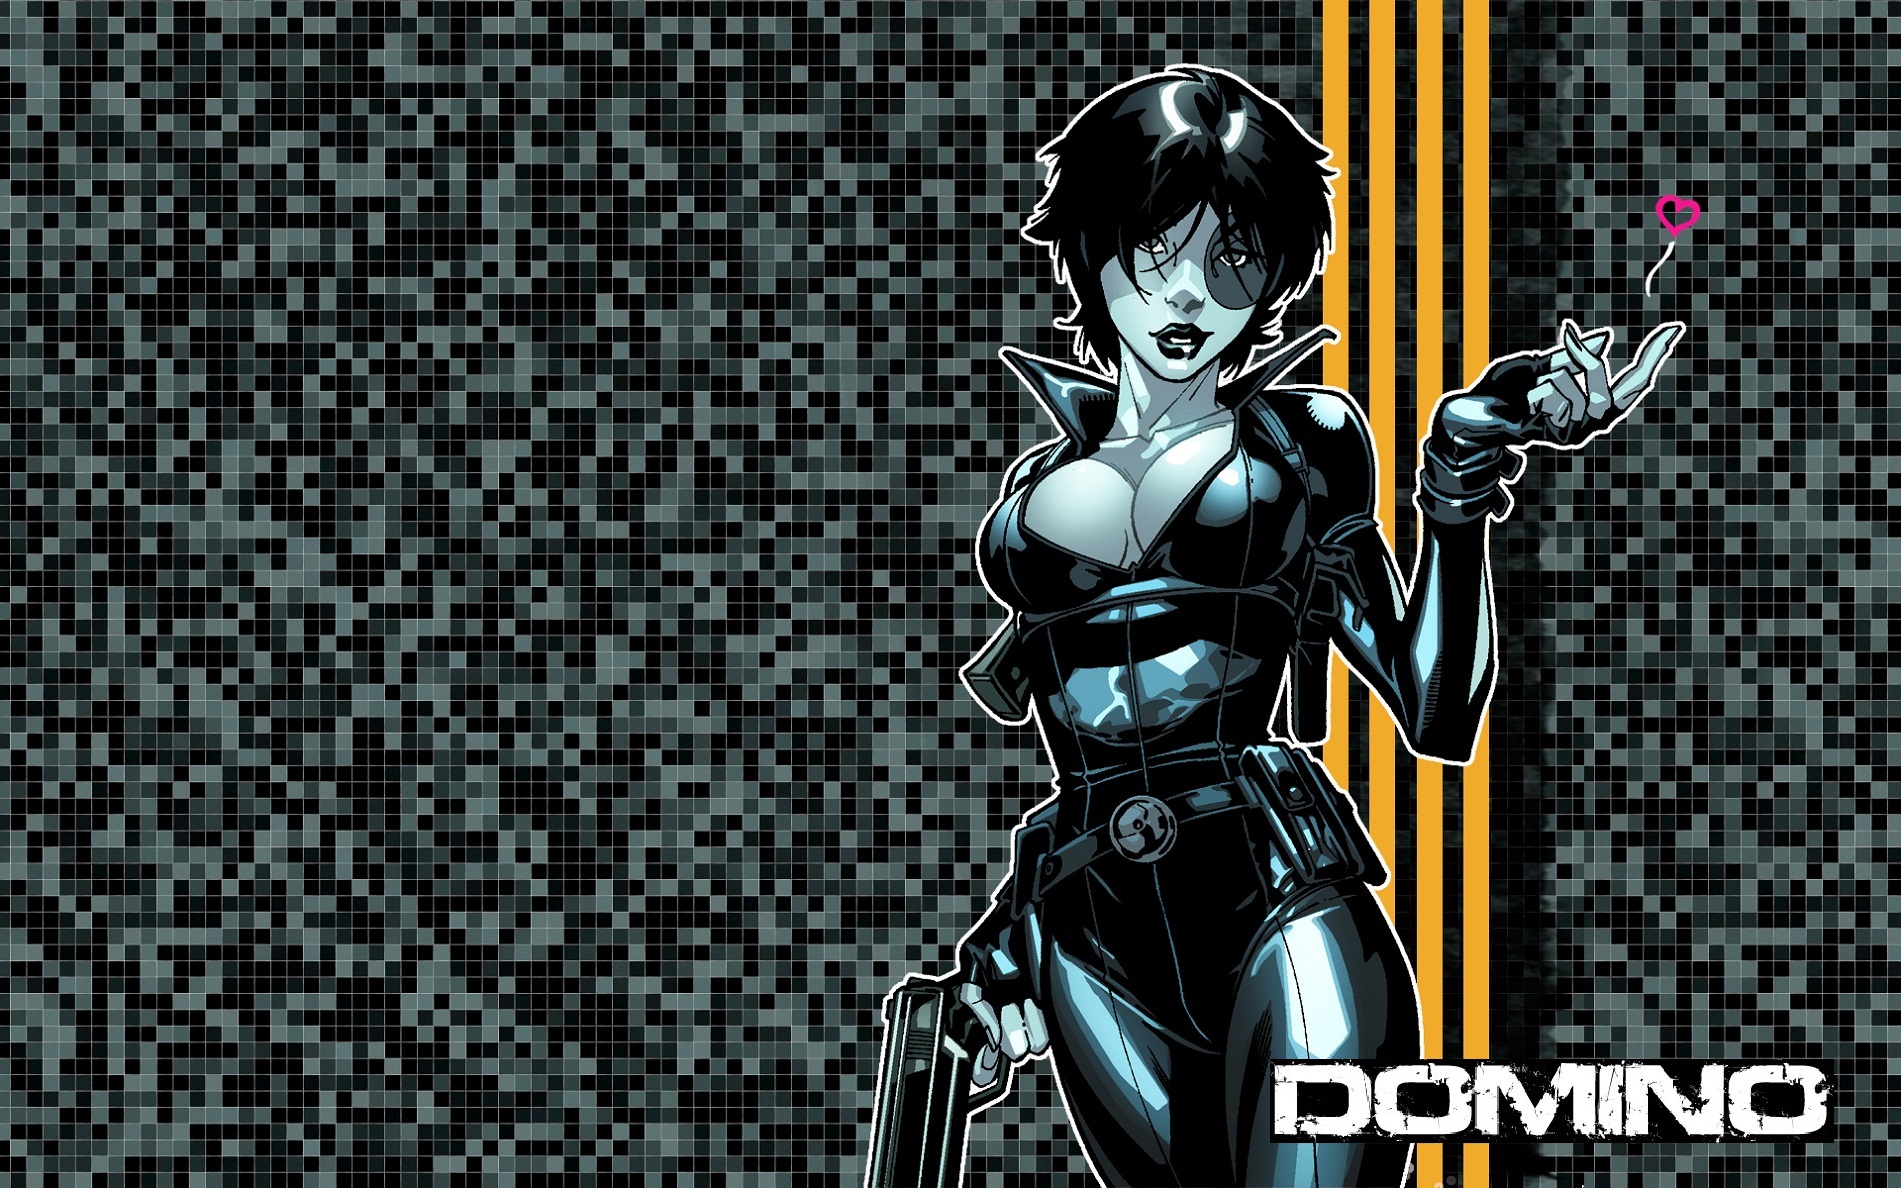 677740 Bild herunterladen comics, domino, domino (marvel comics) - Hintergrundbilder und Bildschirmschoner kostenlos